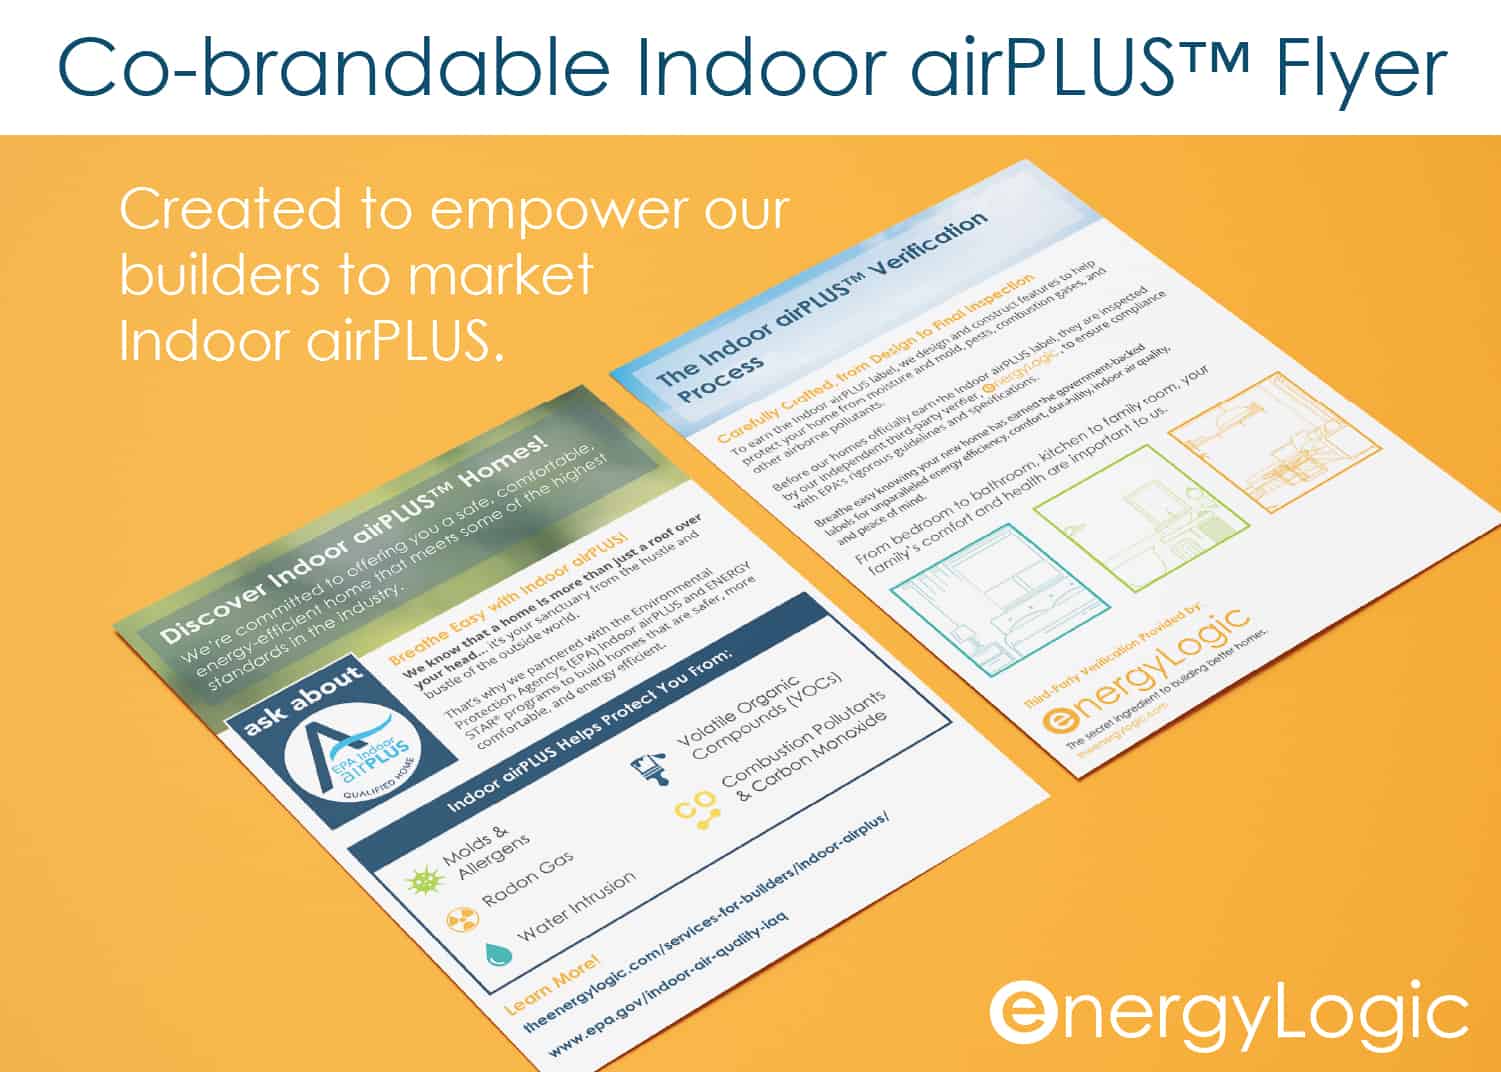 Indoor airPLUS 2020 Award Image of EnergyLogic's Co-brandable Flyer